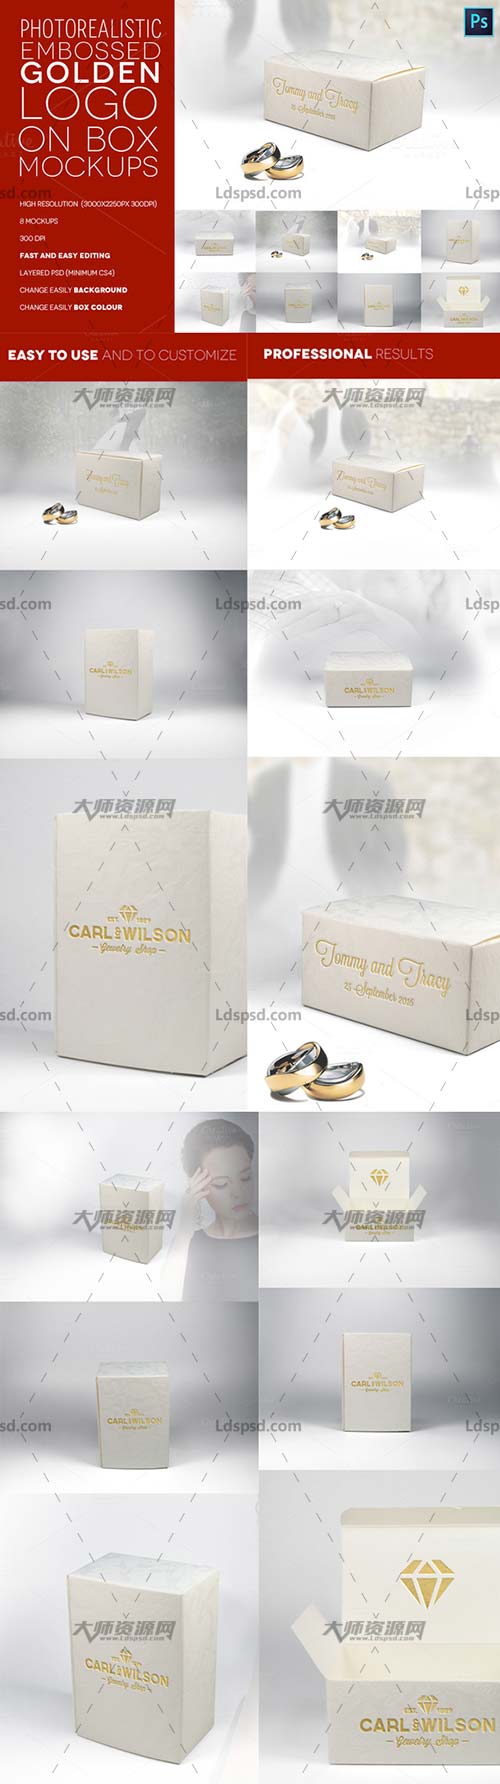 Embossed Golden Logo on Box Mockups,烫金效果的礼物盒模型